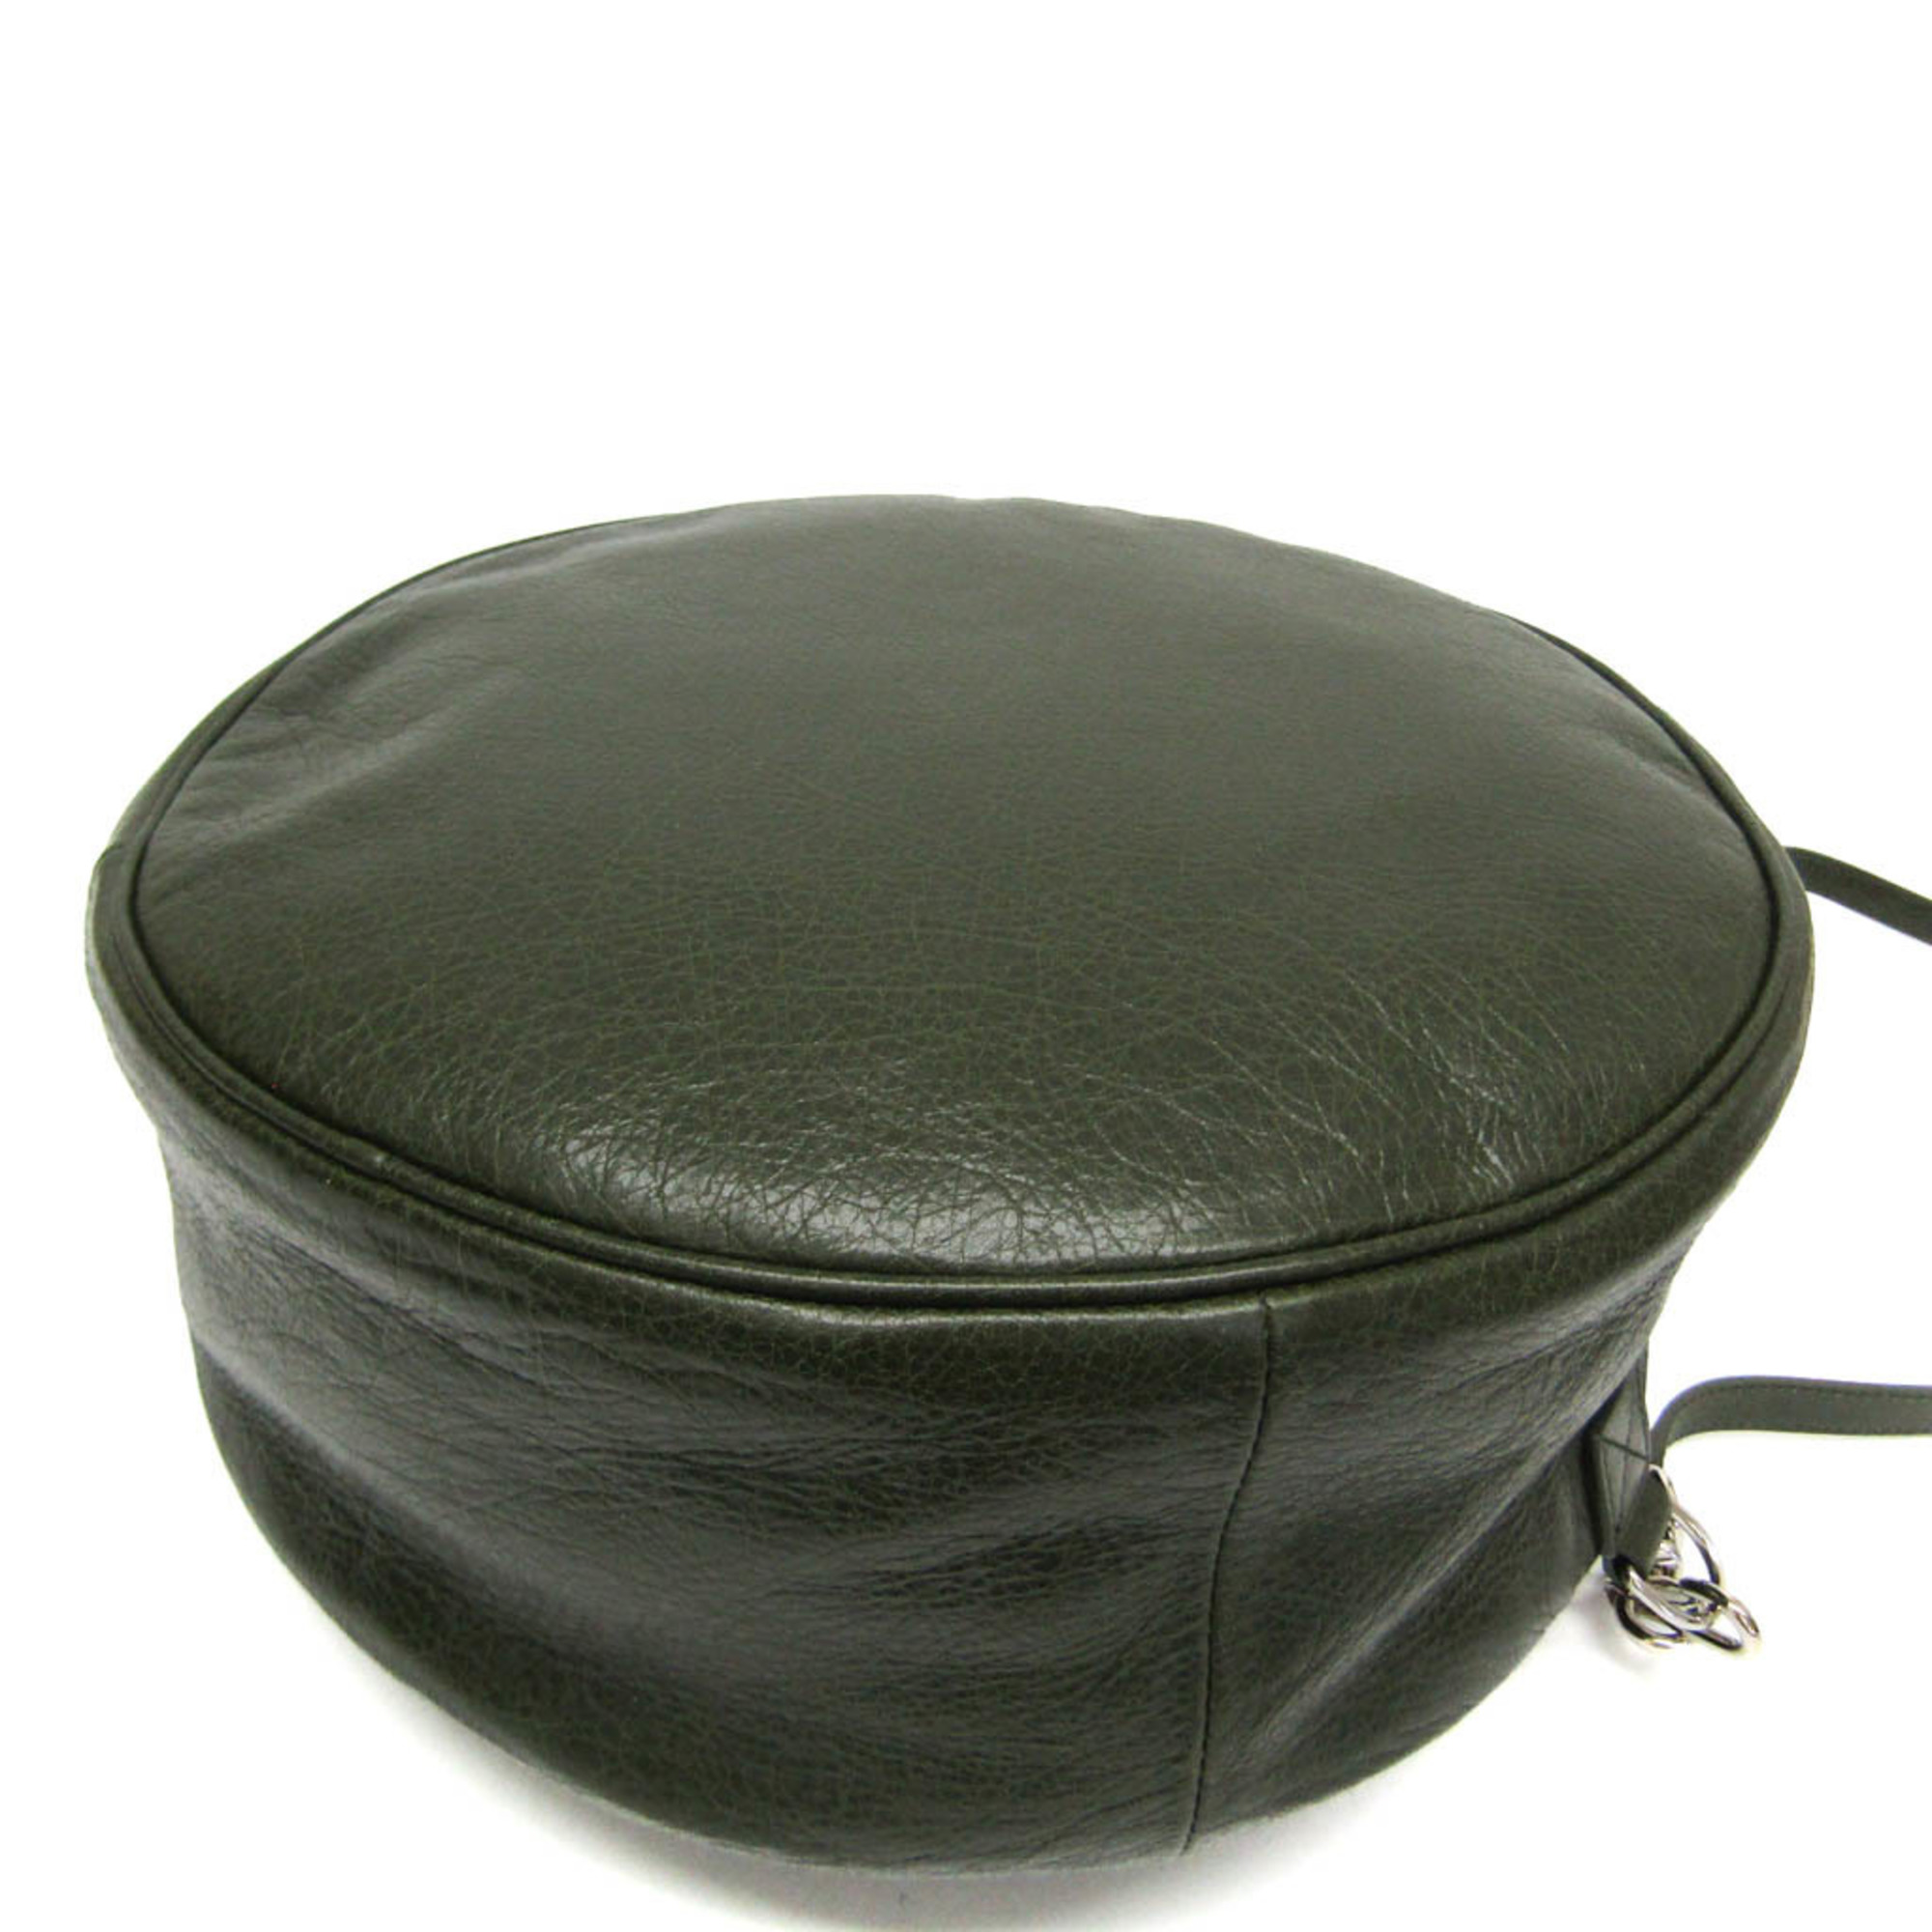 Balenciaga Air Hobo S 466844 Women's Leather Handbag,Shoulder Bag Khaki